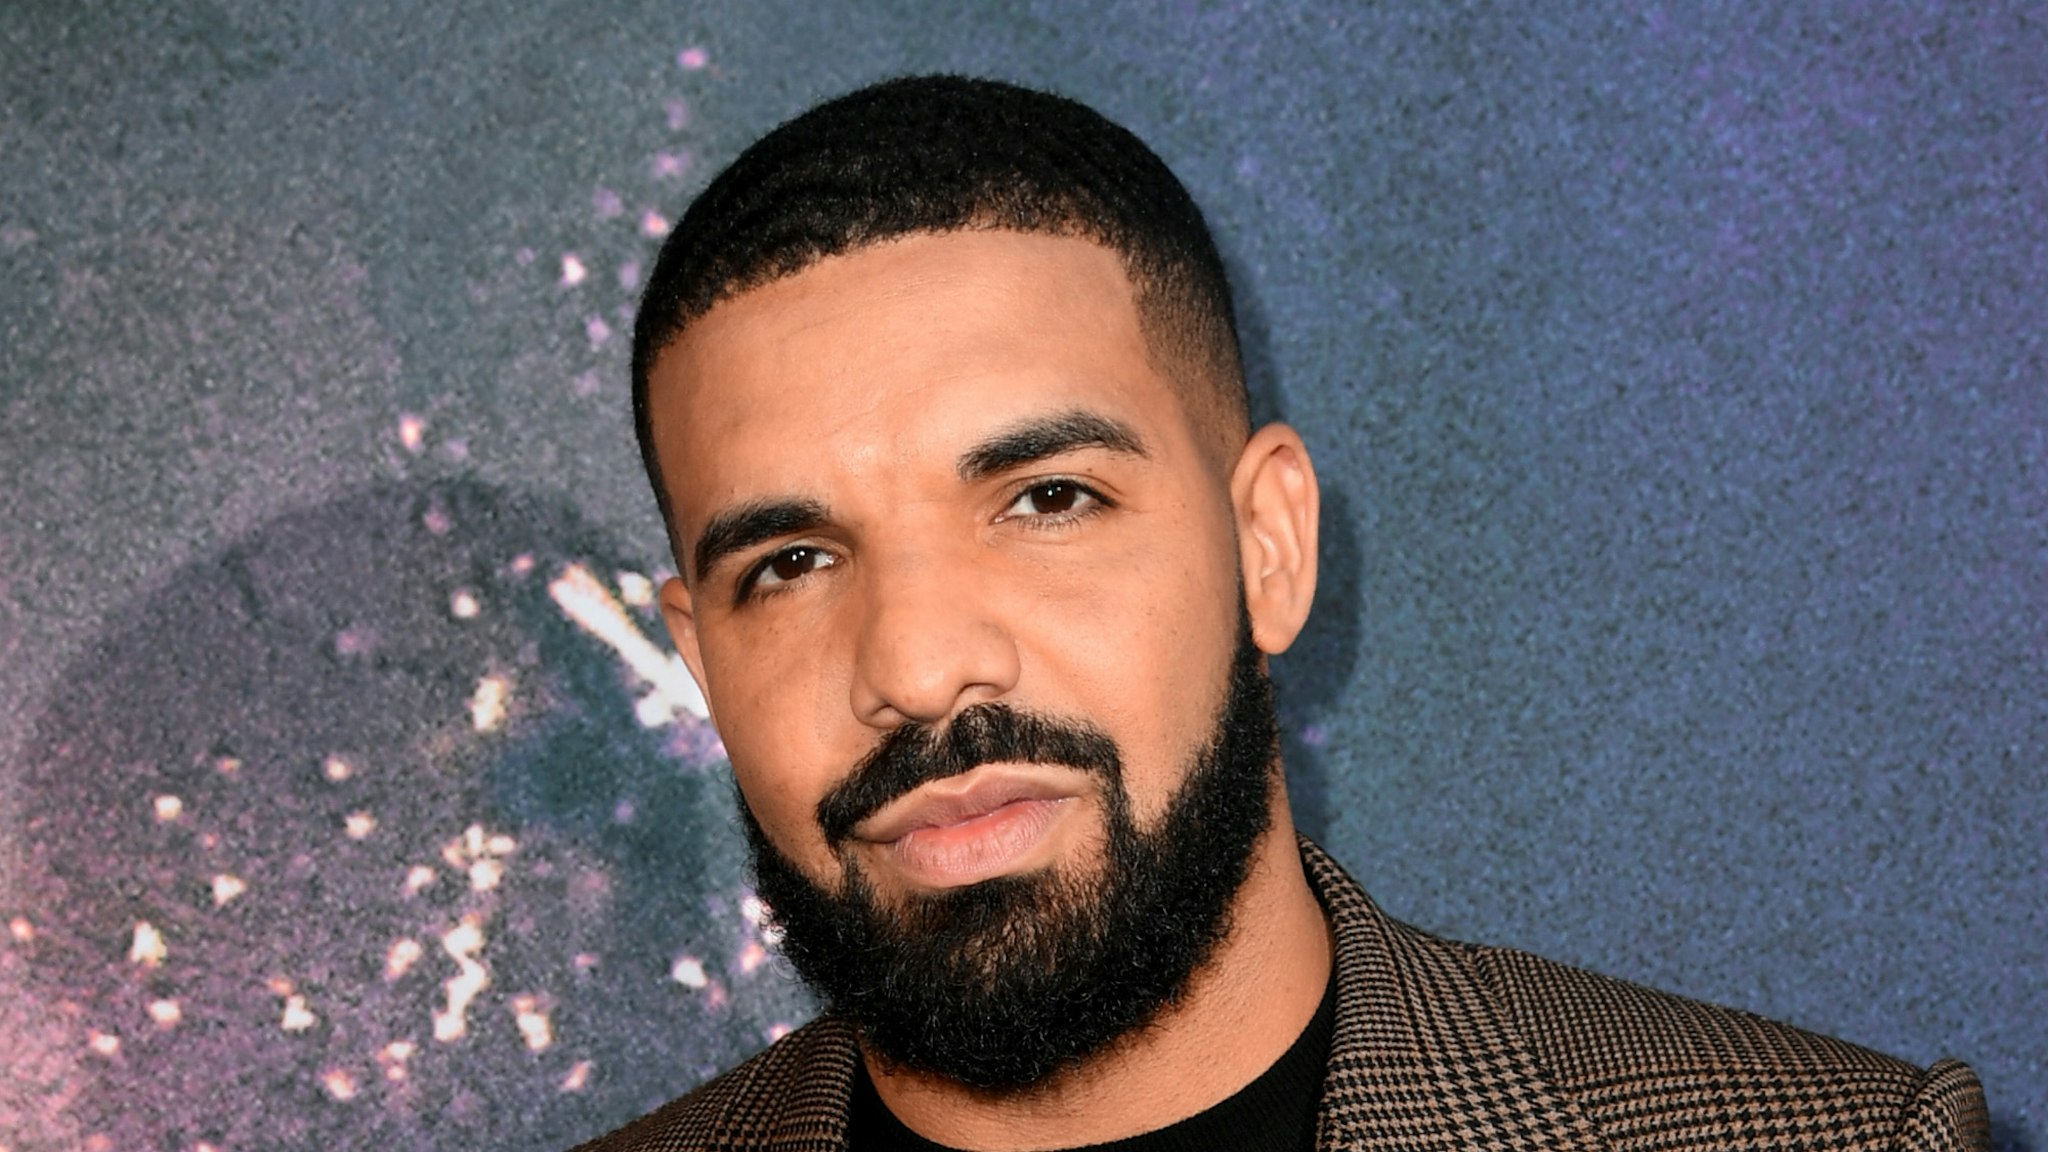 Drake attends the LA Premiere of HBO's "Euphoria" at The Cinerama Dome on June 04, 2019 in Los Angeles, California.